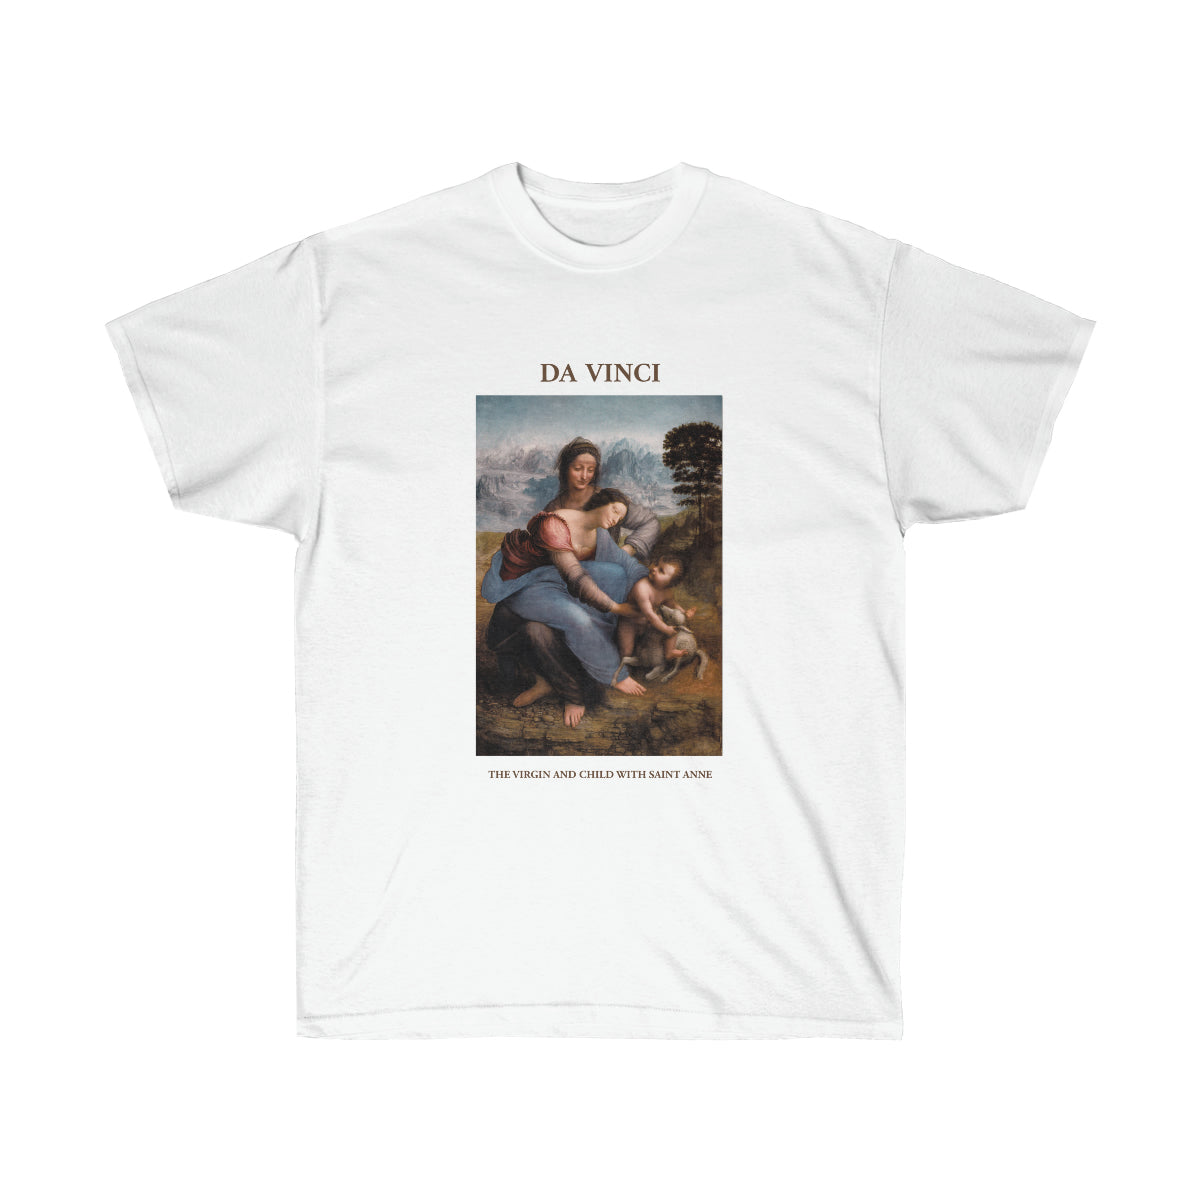 Leonardo da Vinci The Virgin and Child with Saint Anne T-shirt